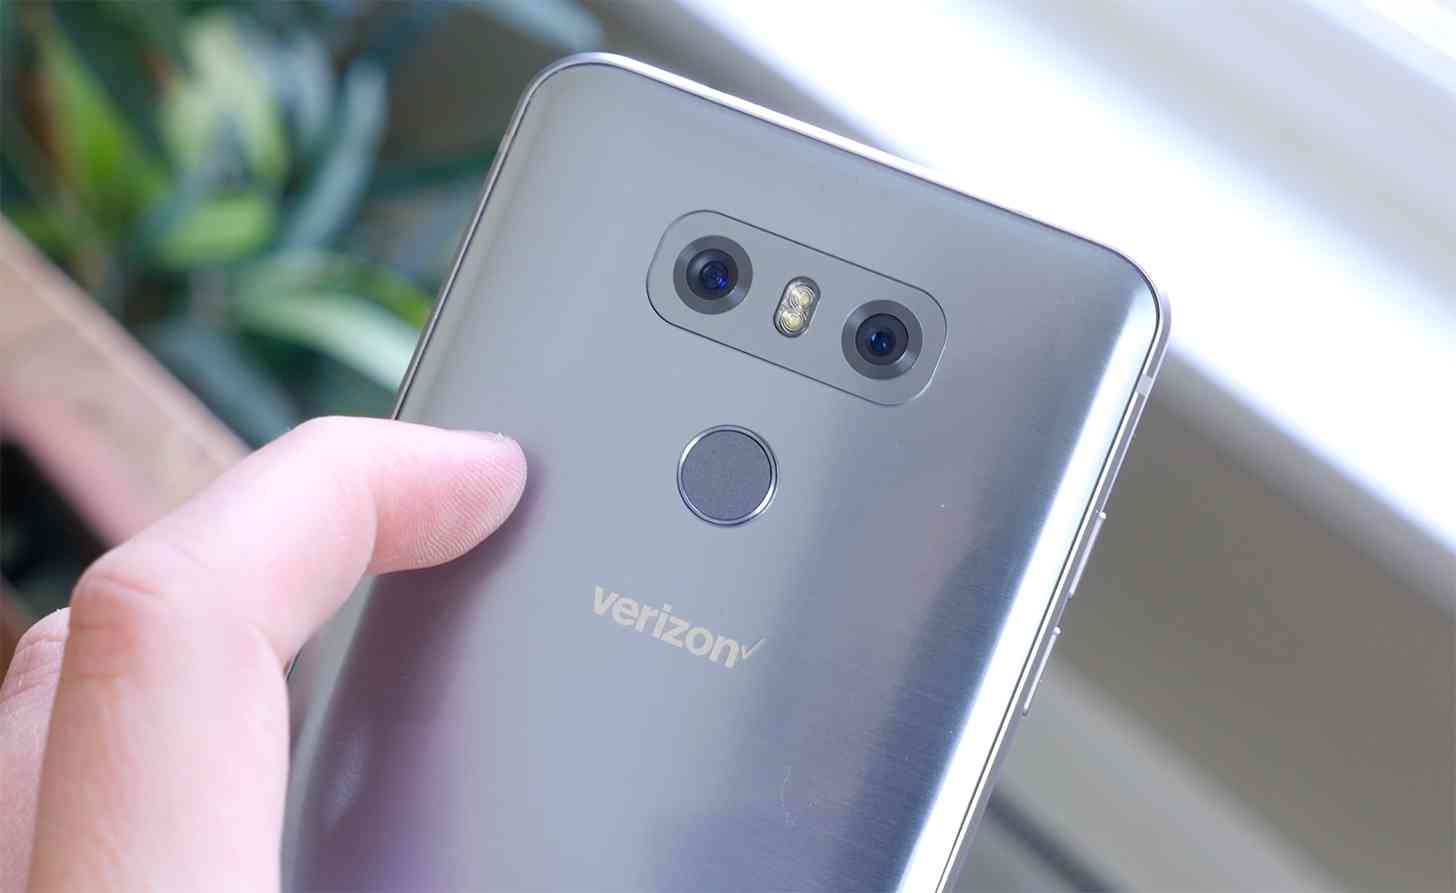 Verizon logo LG G6 hands-on